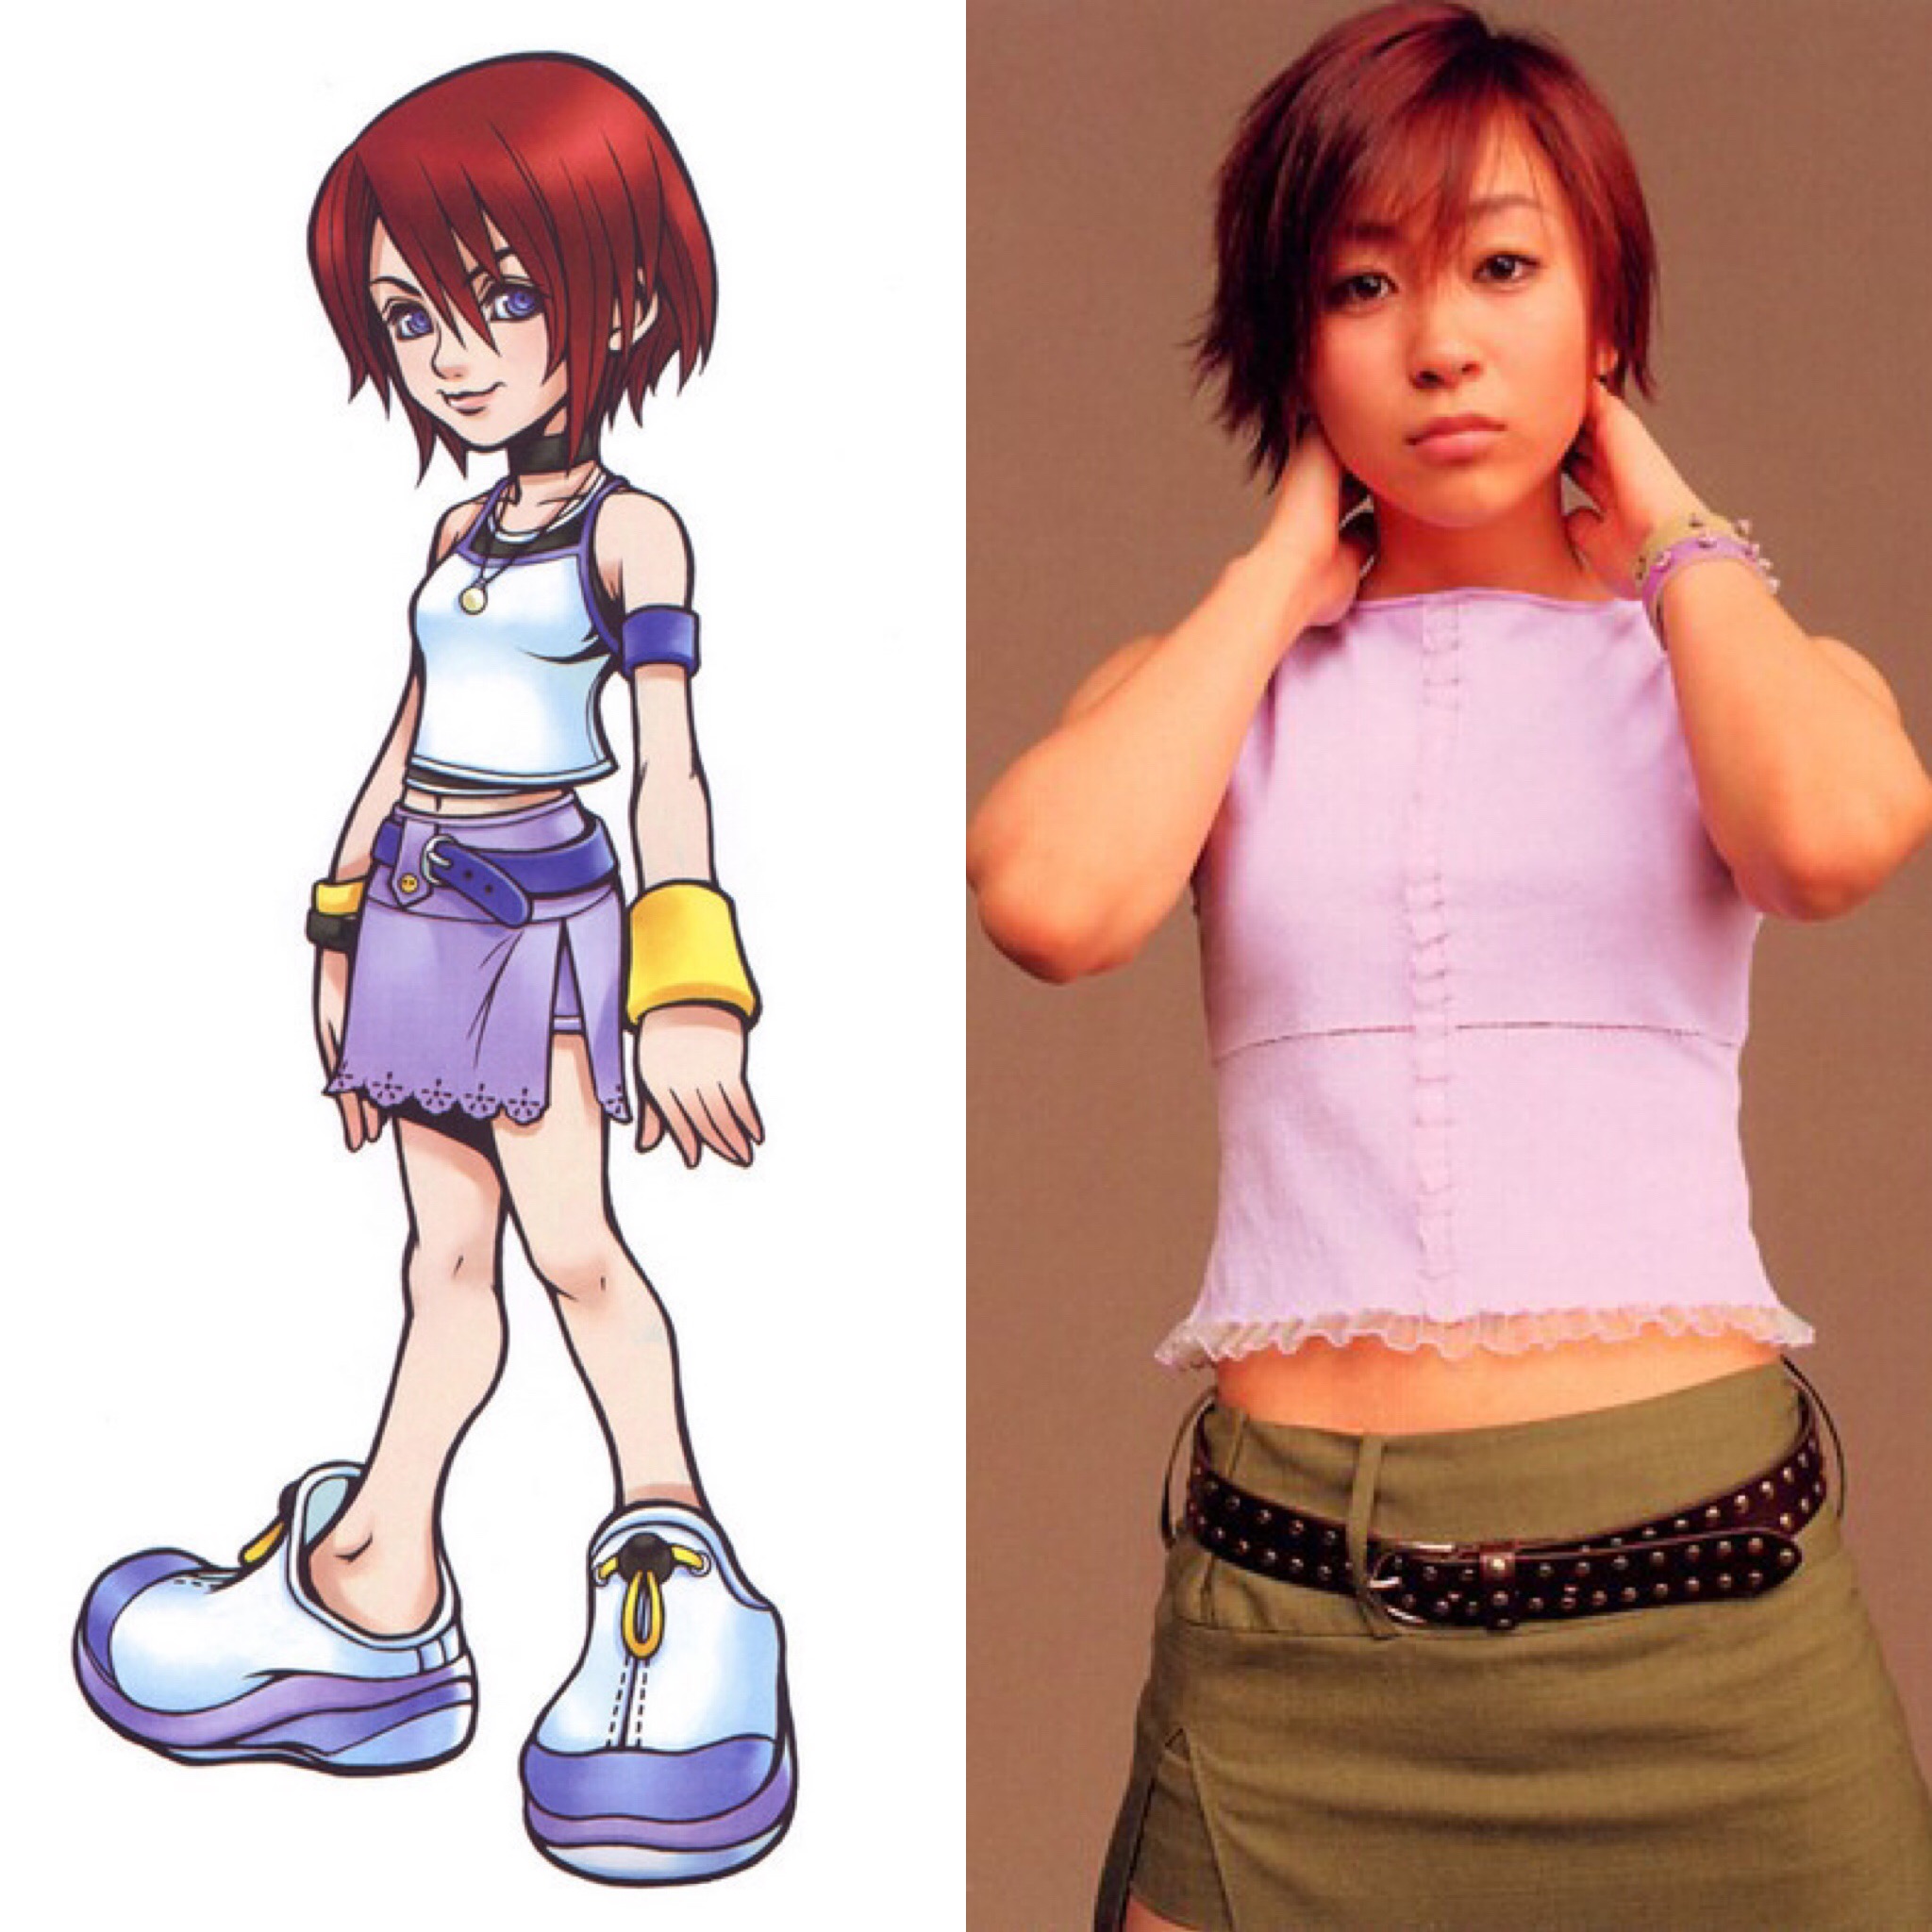 Kingdom Hearts character Kairi’s hair was inspired by Utada Hikaru